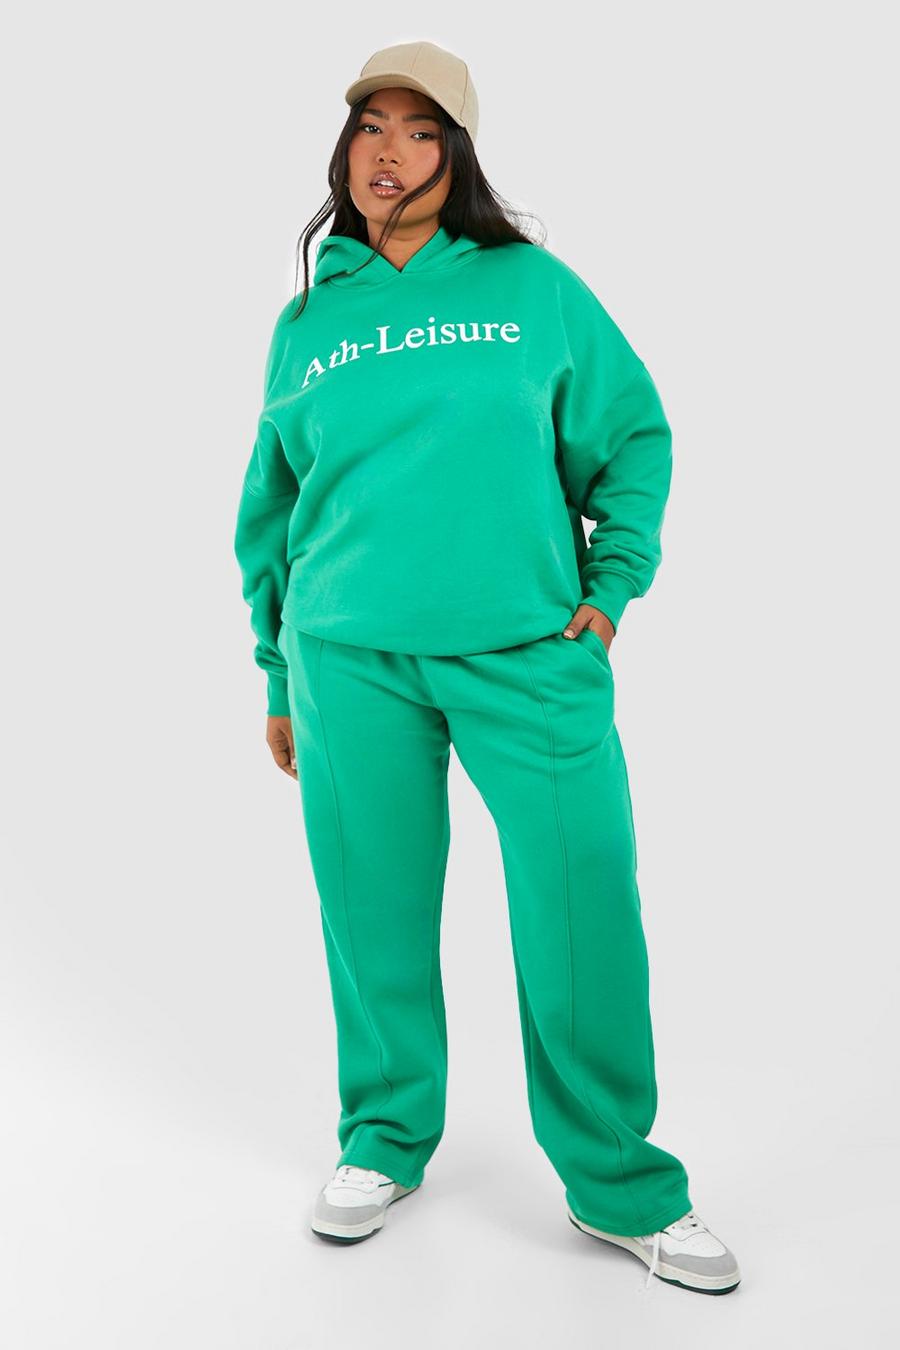 Plus Trainingsanzug mit Ath Leisure Print und Kapuze, Green